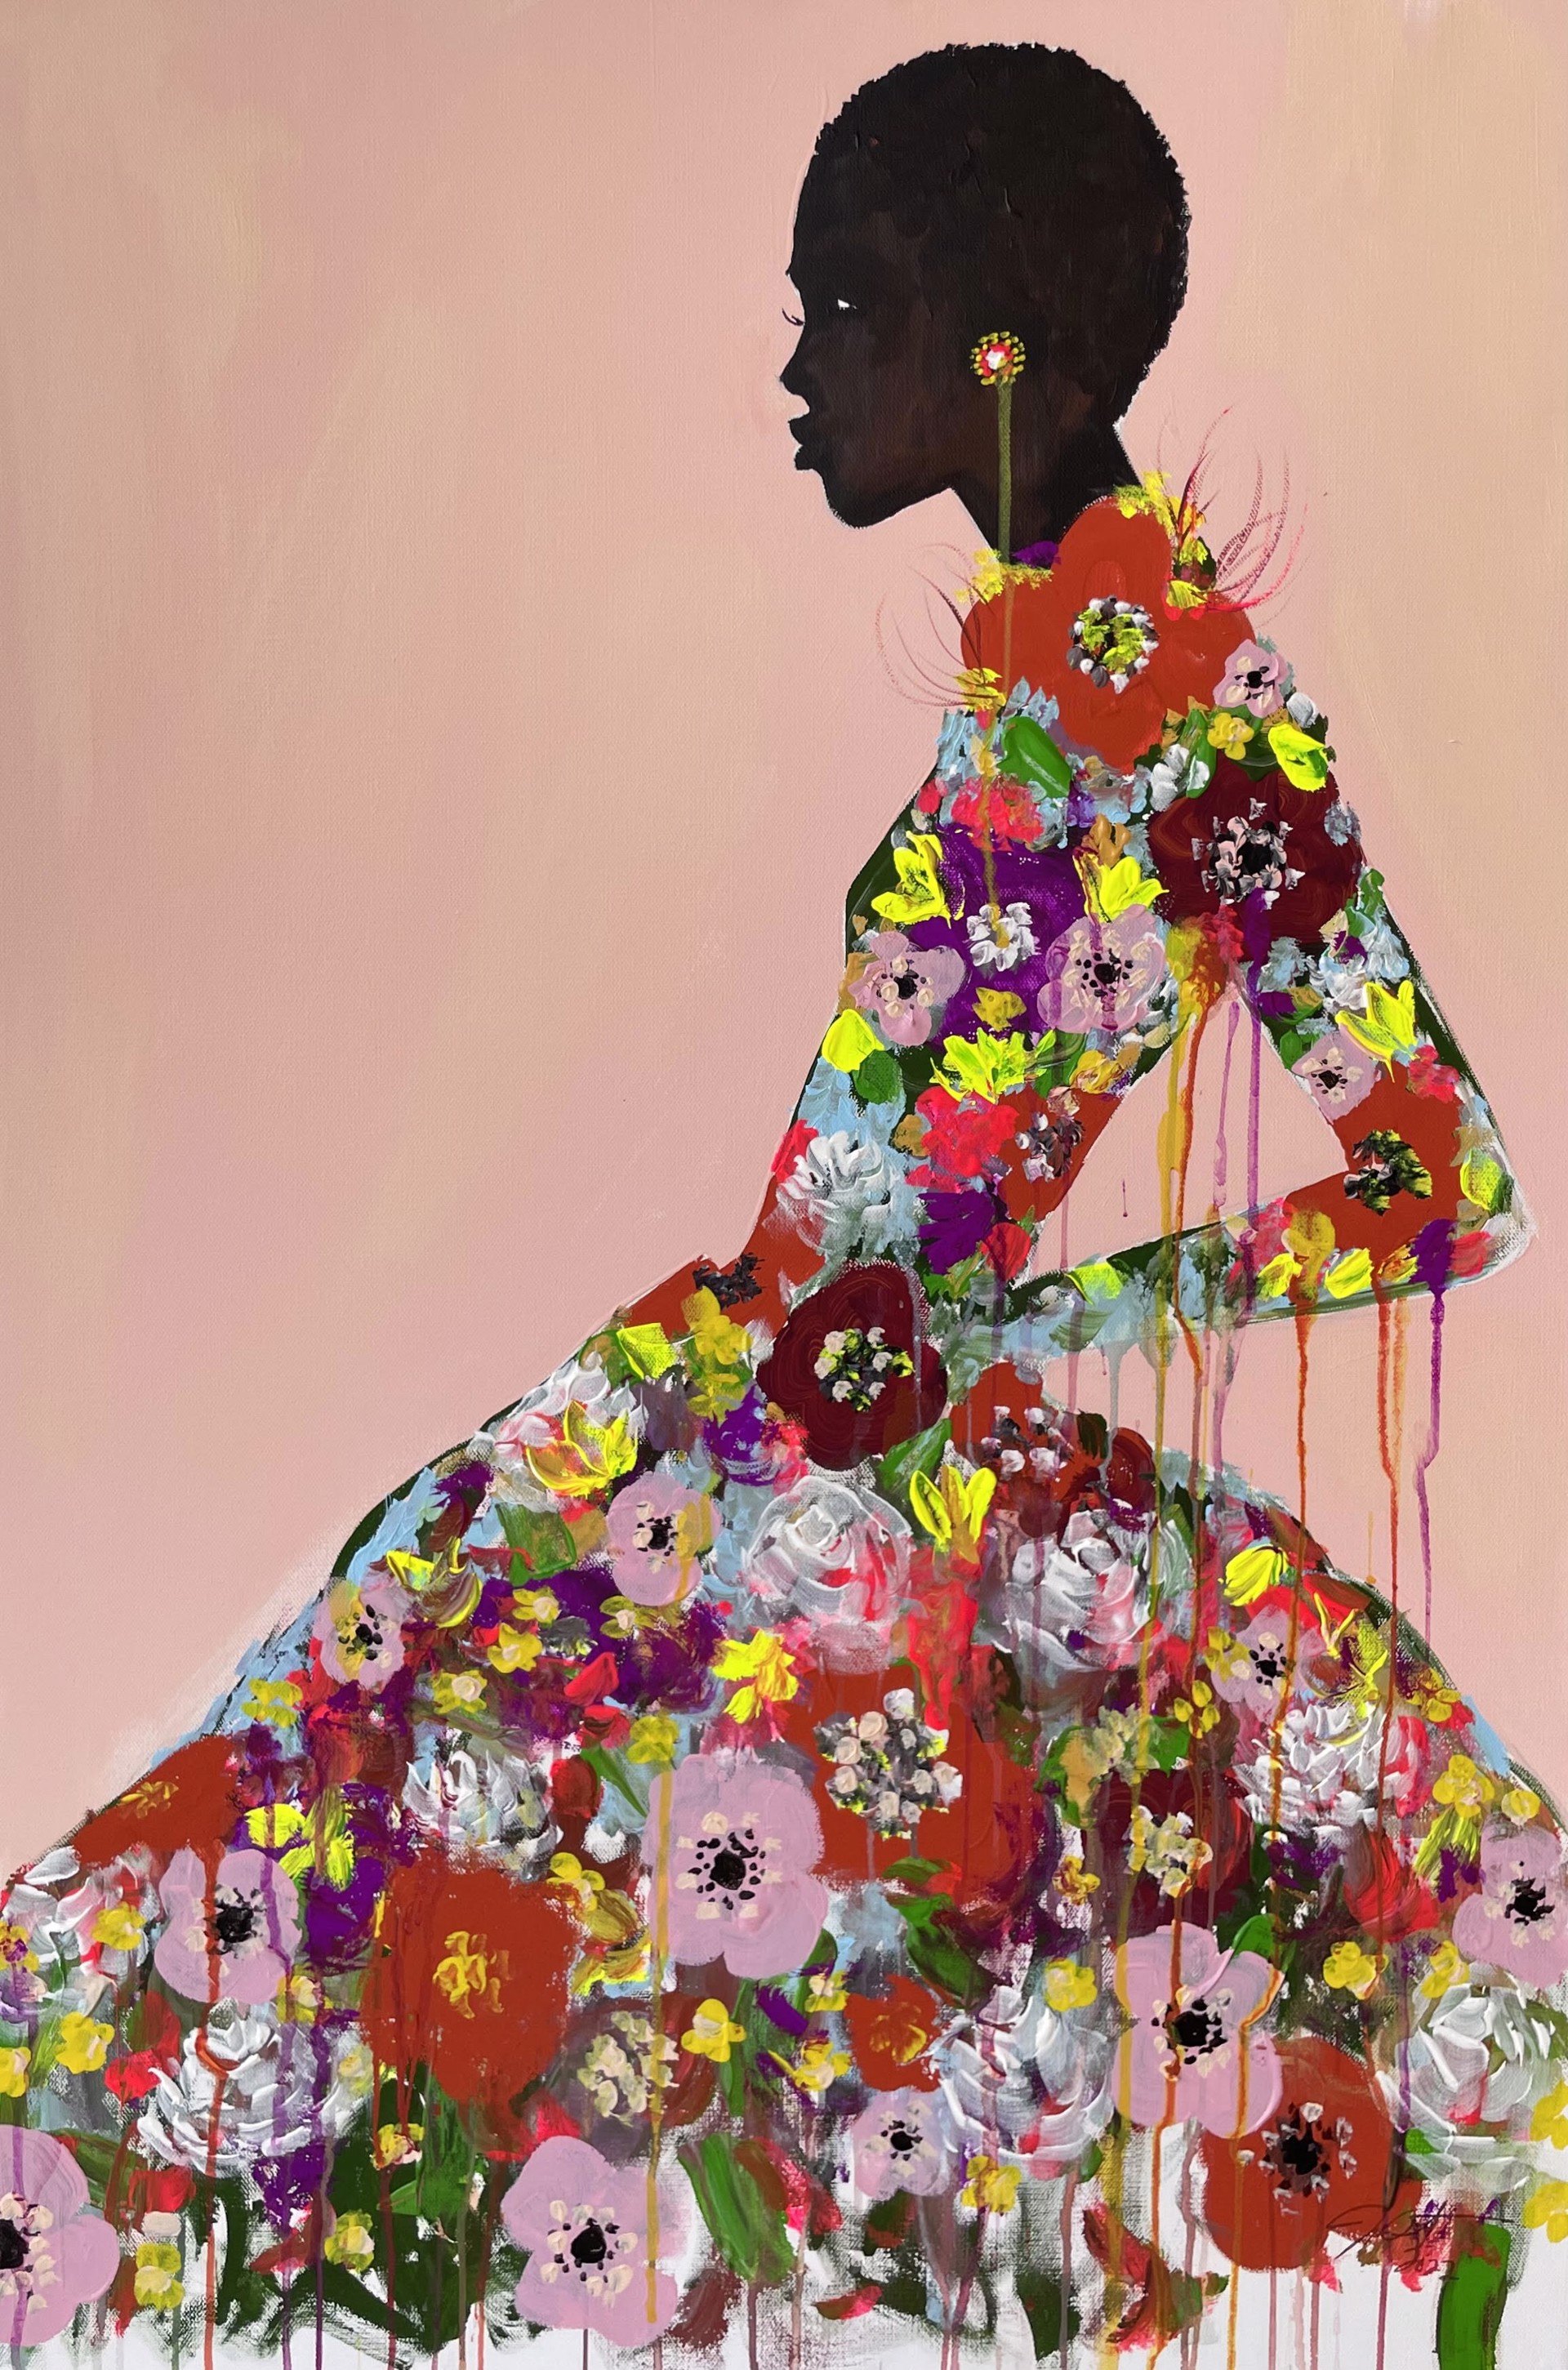 Fantastical Dress by Jessica Durrant